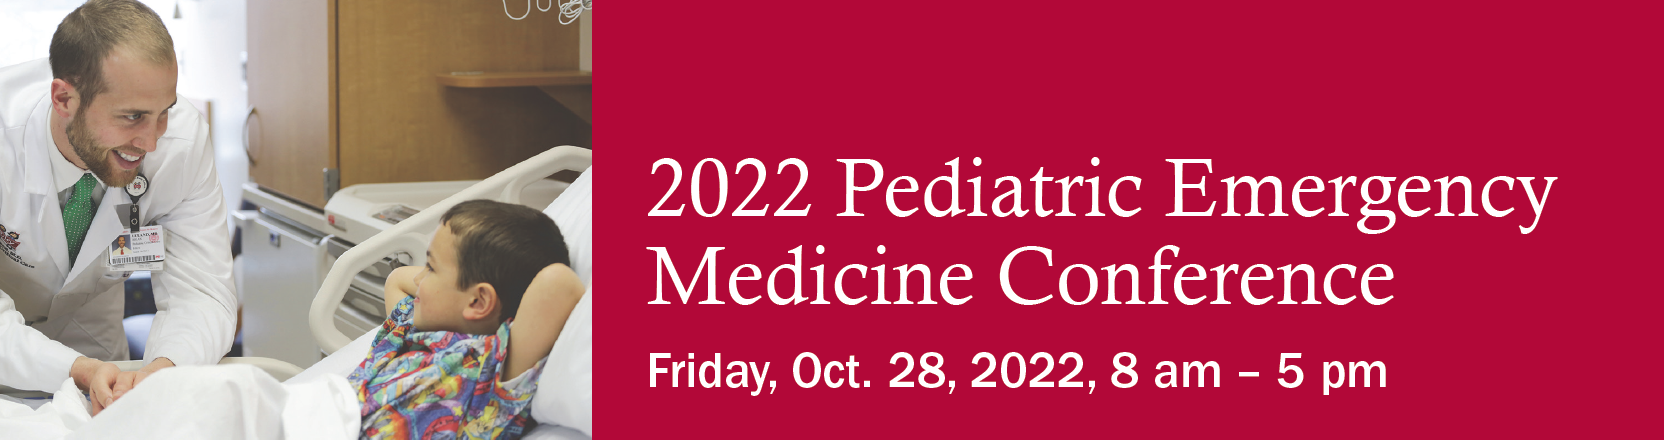 2022 Pediatric Emergency Medicine Conference Banner